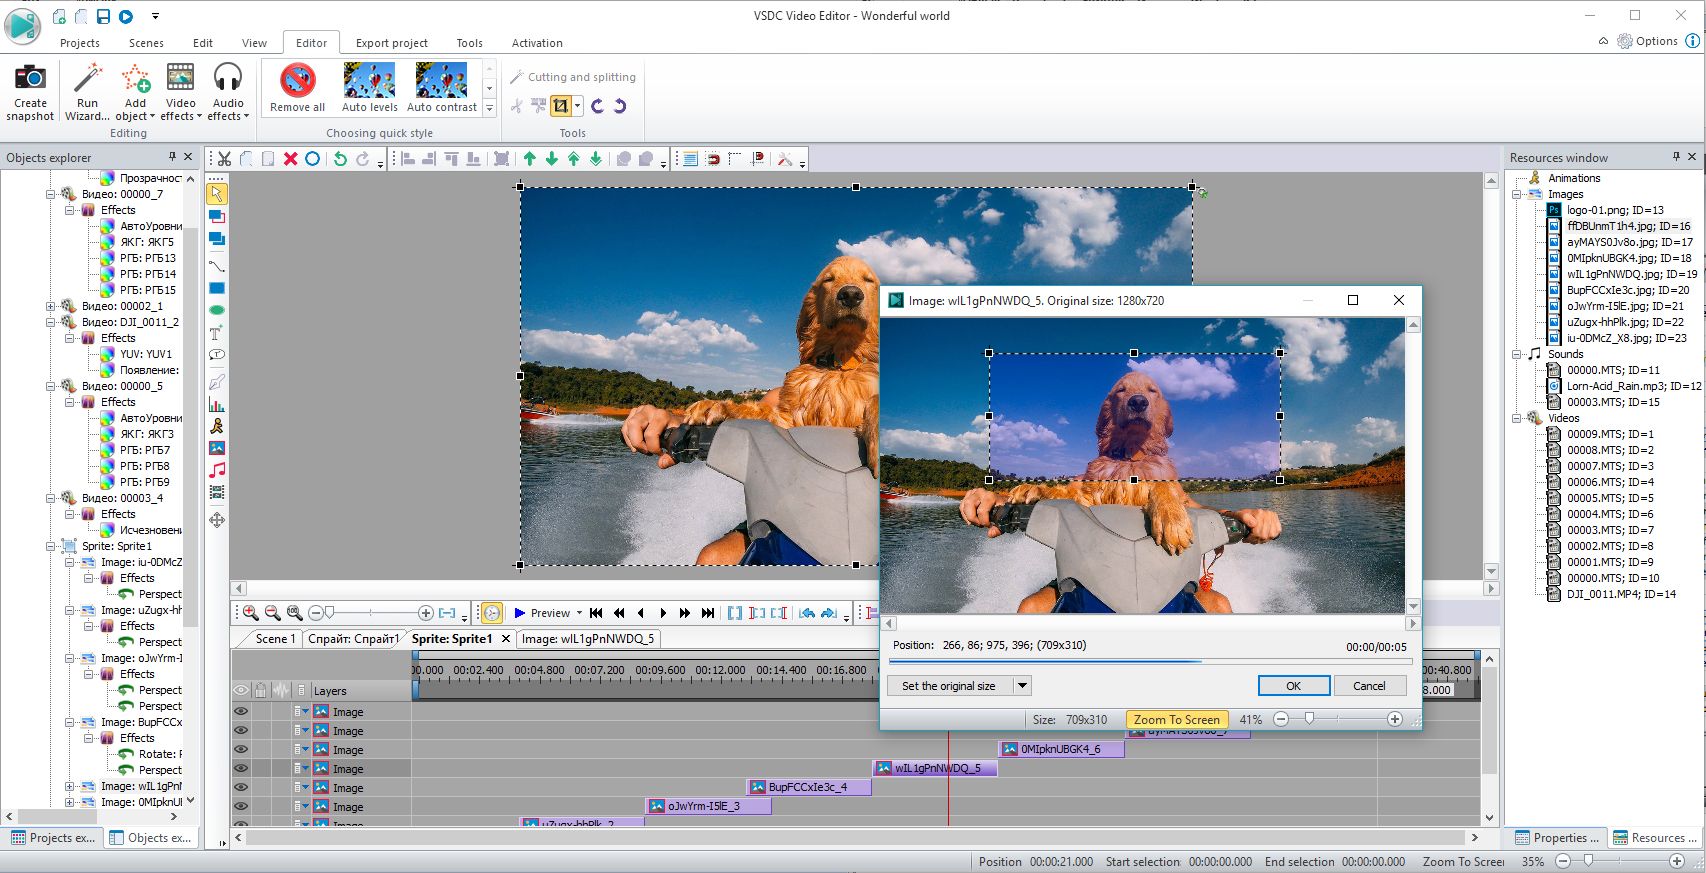 VSDC – Free Video Editing Software for Windows 11 (32-Bit & 64-Bit)